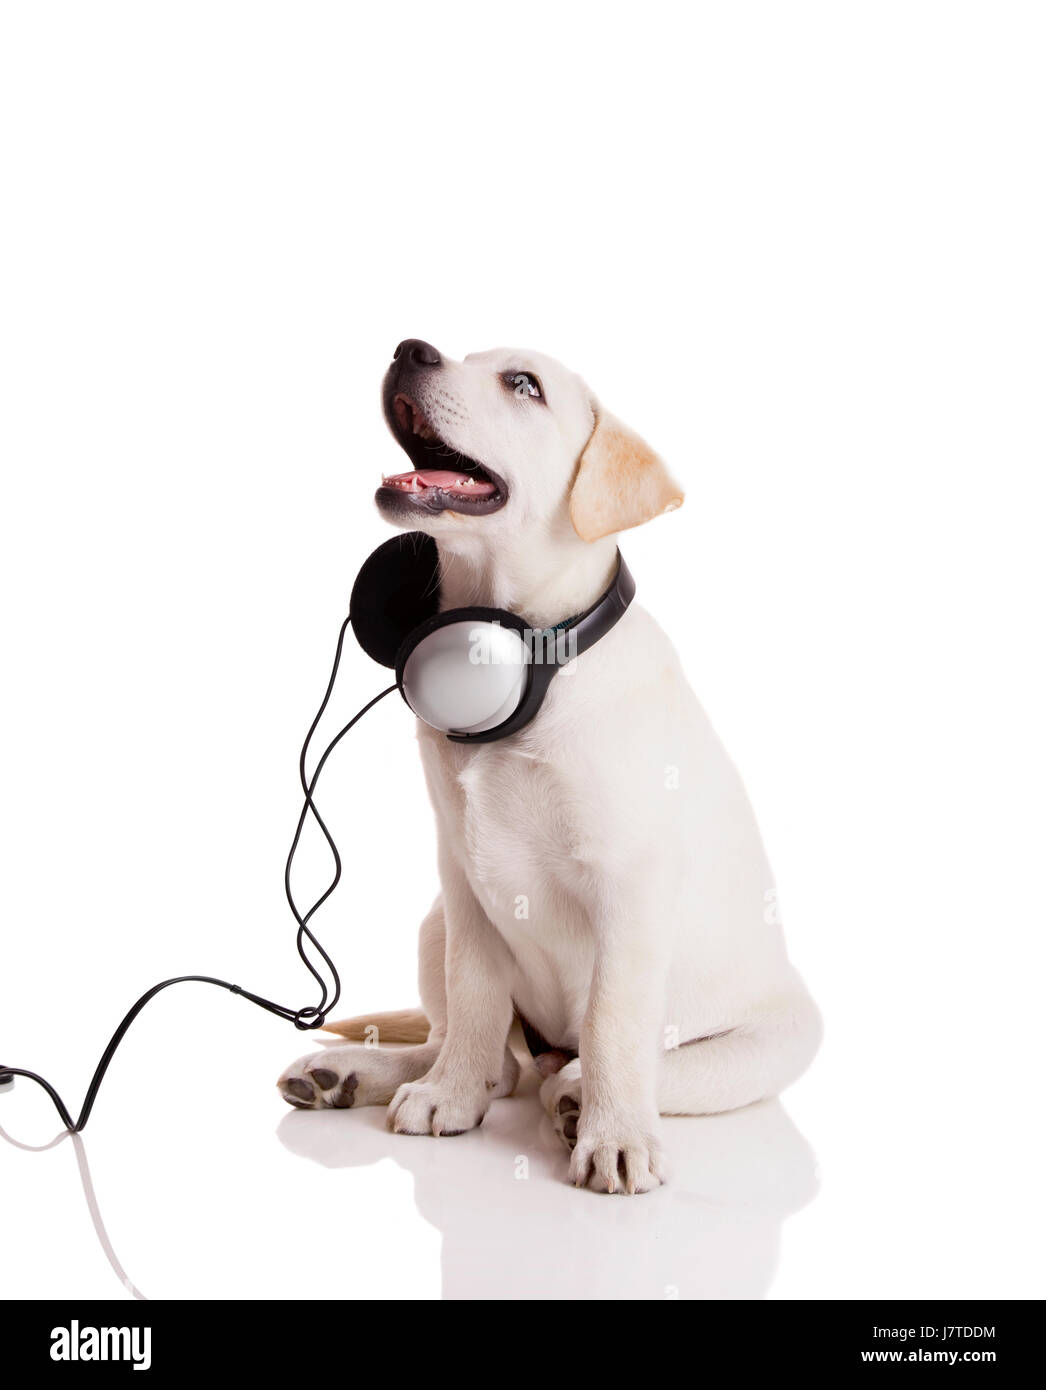 music animal dog puppy headset earphones headphones put sitting sit  labrador Stock Photo - Alamy